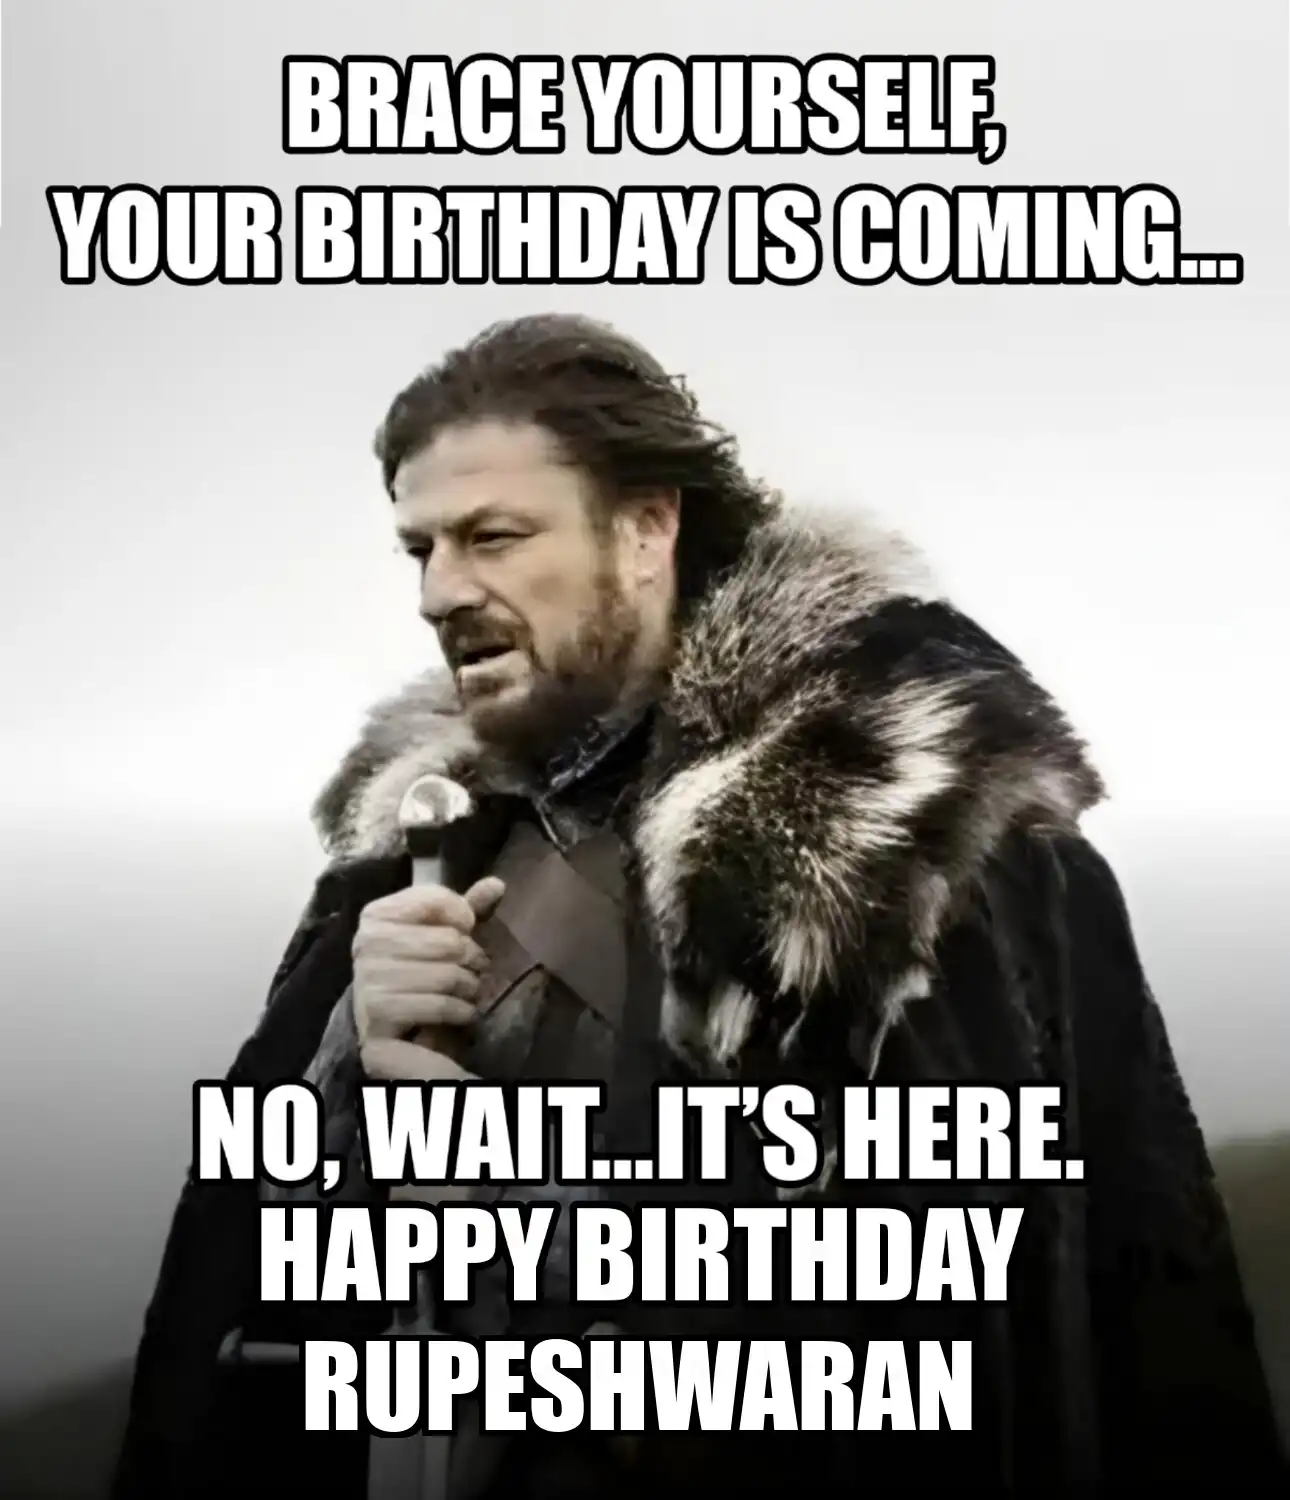 Happy Birthday Rupeshwaran Brace Yourself Your Birthday Is Coming Meme